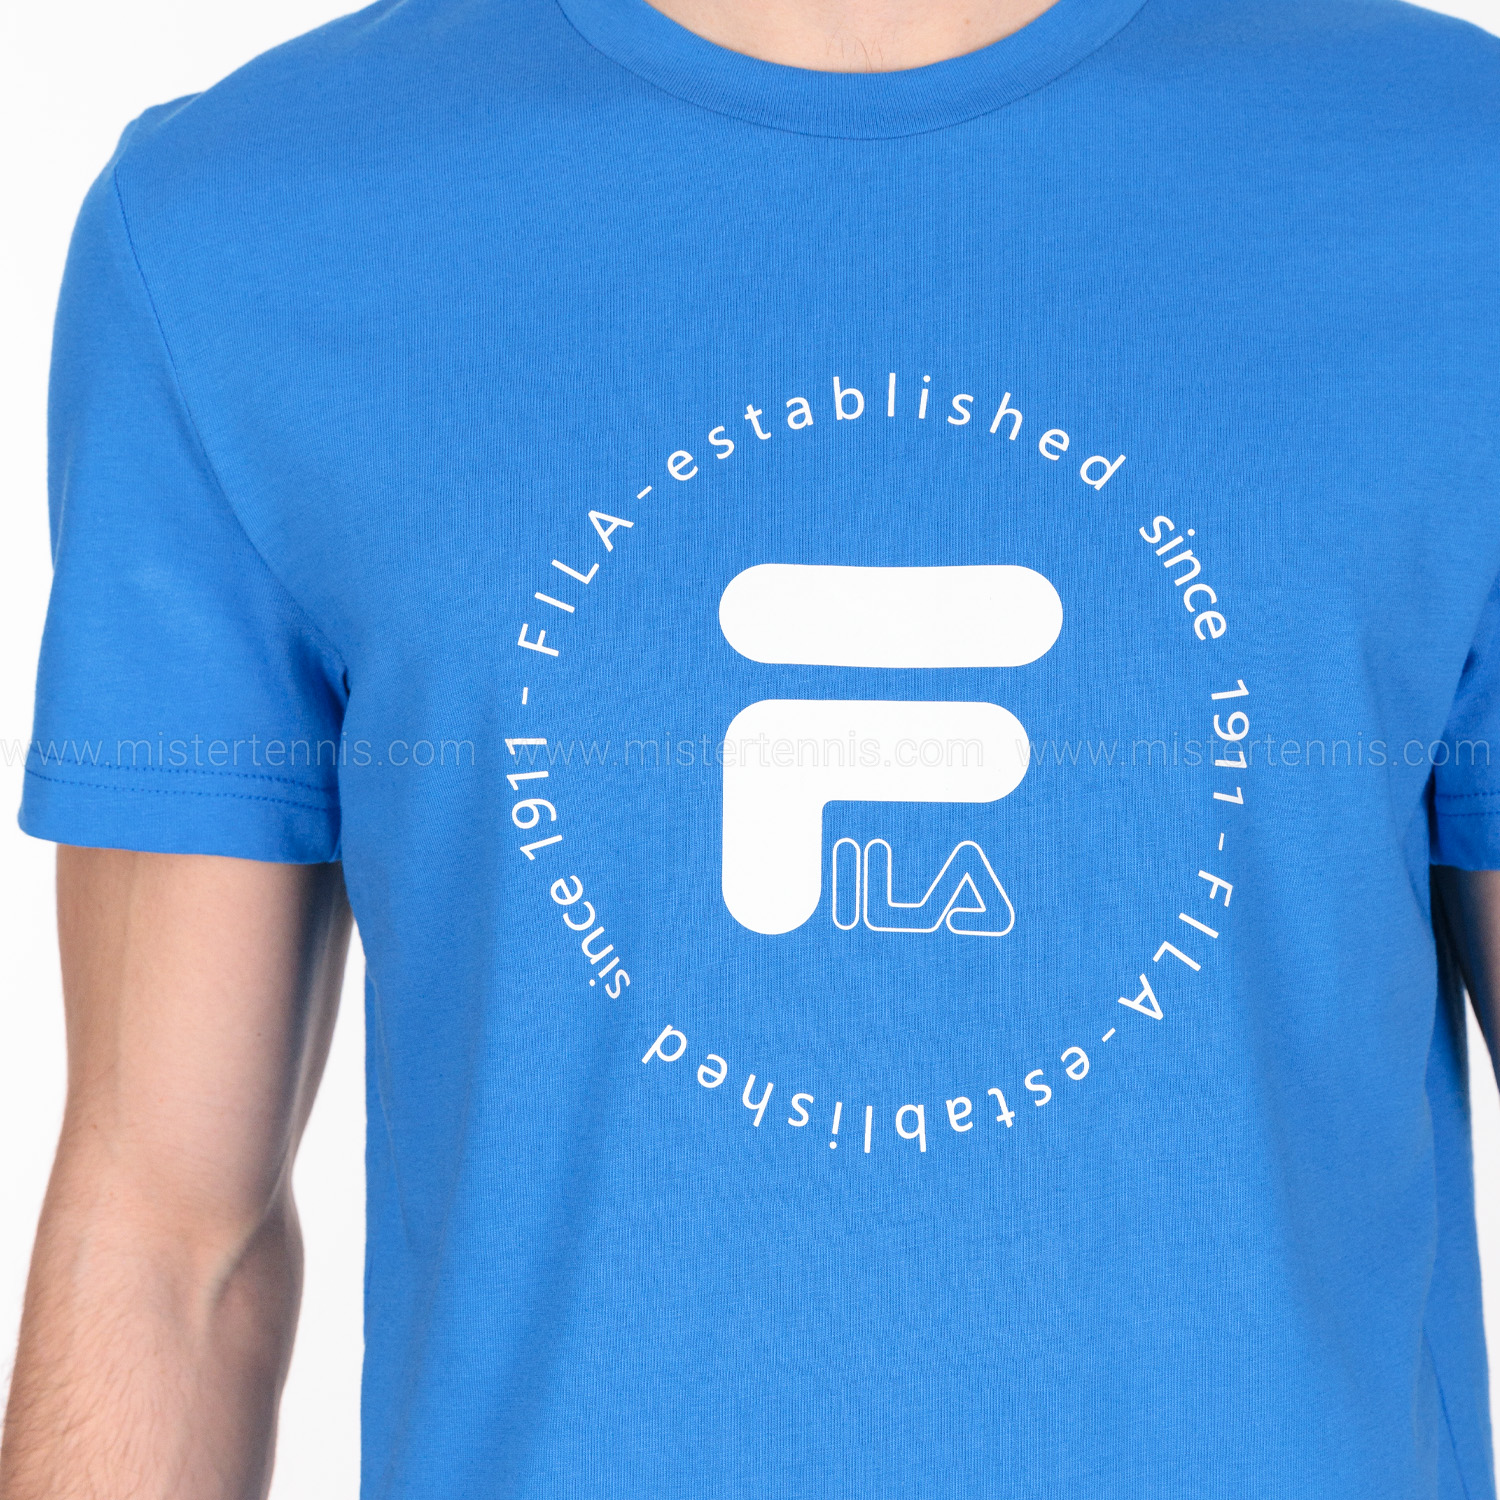 Fila Lasse Camiseta - Simply Blue